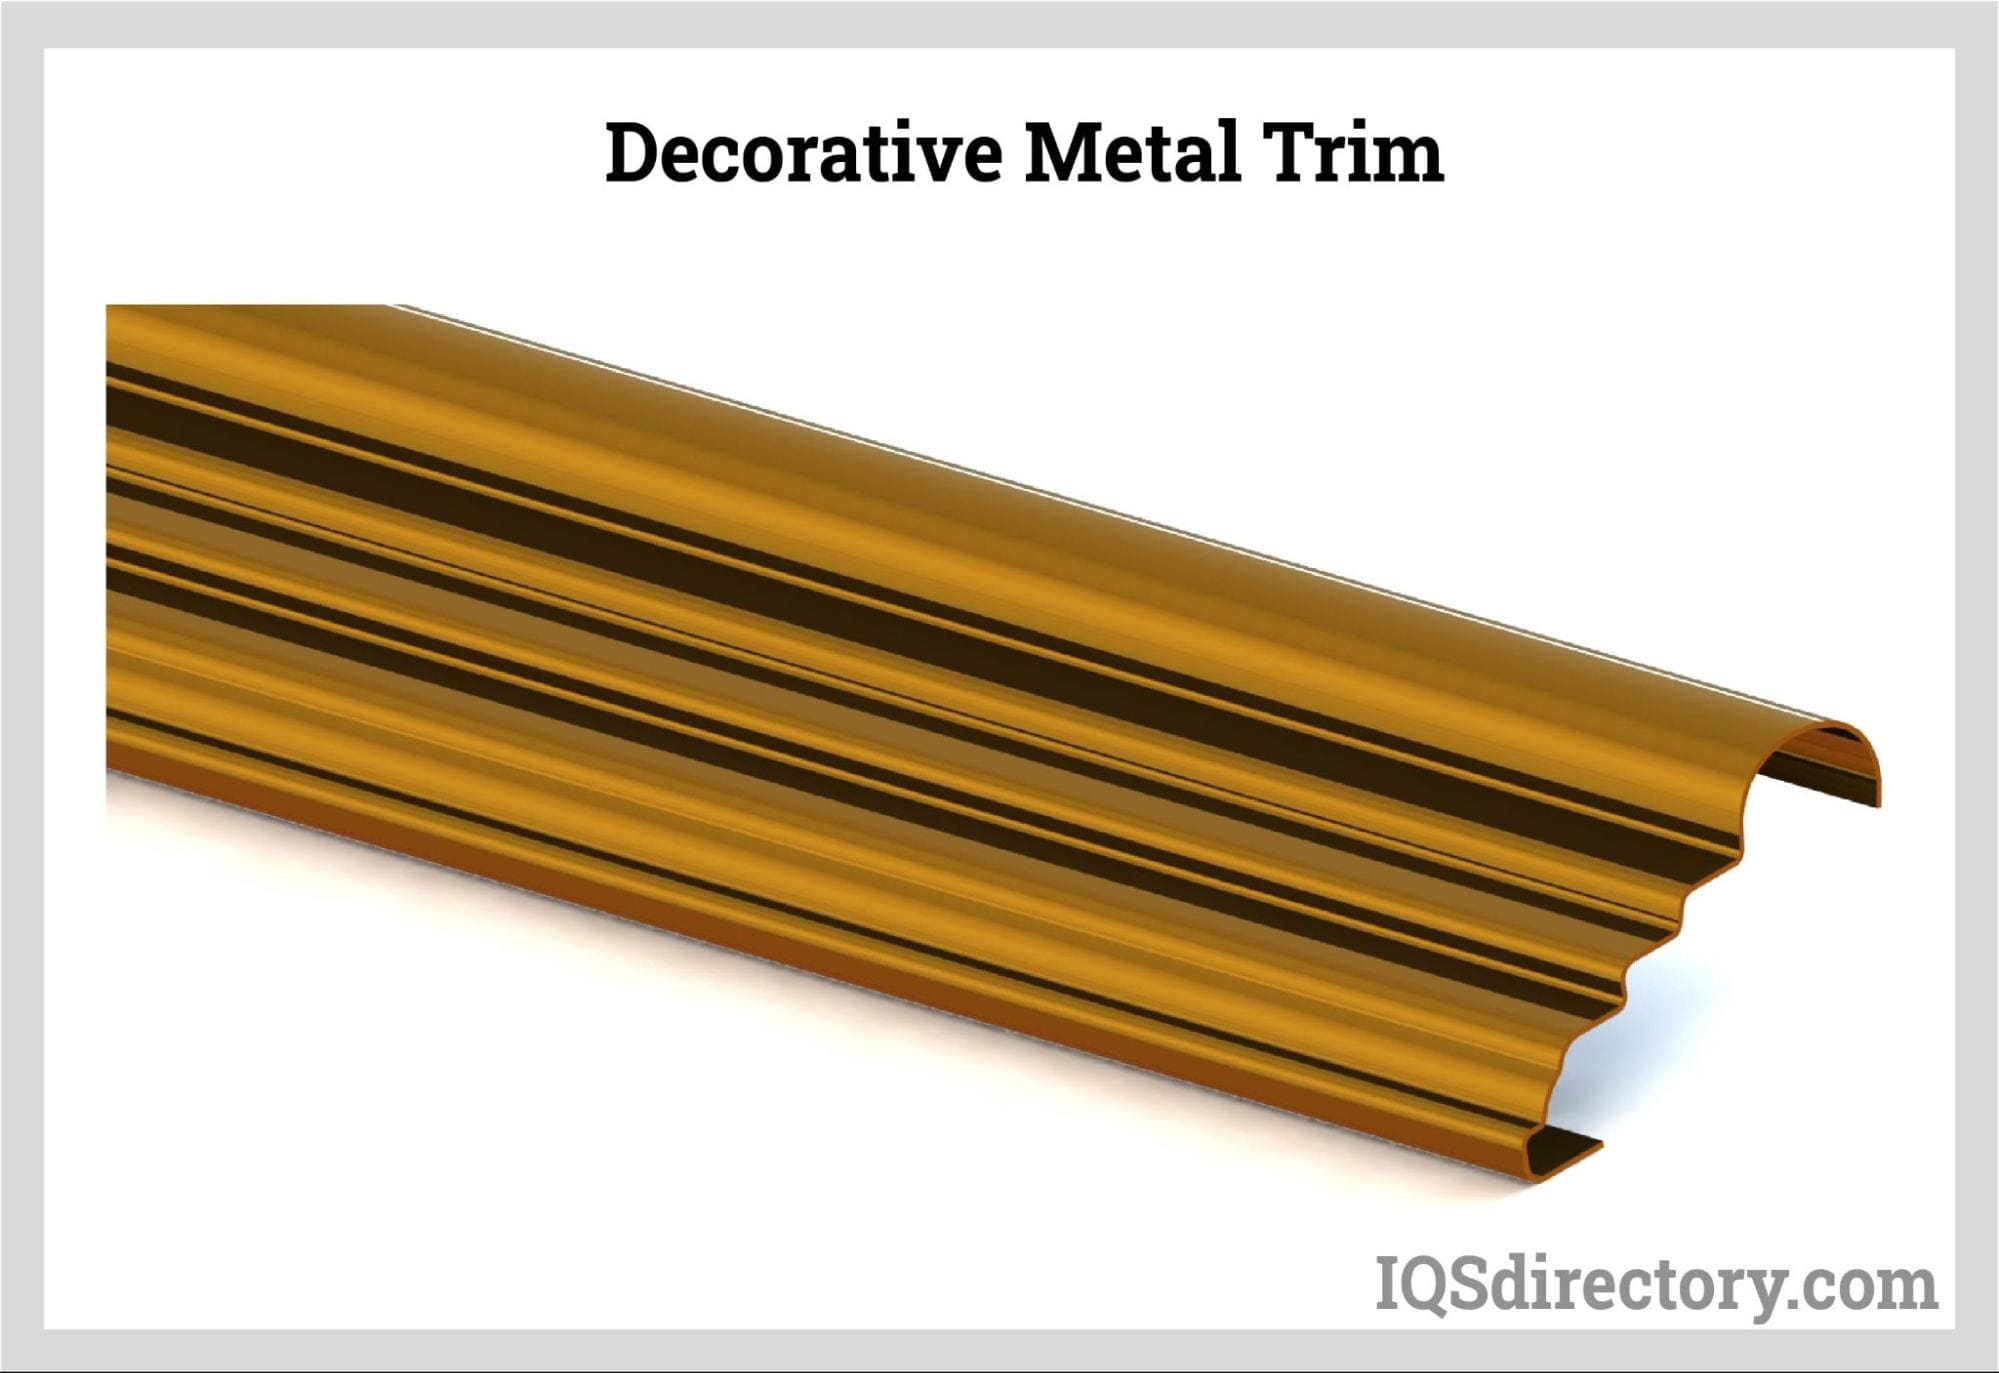 Decorative Metal Trim